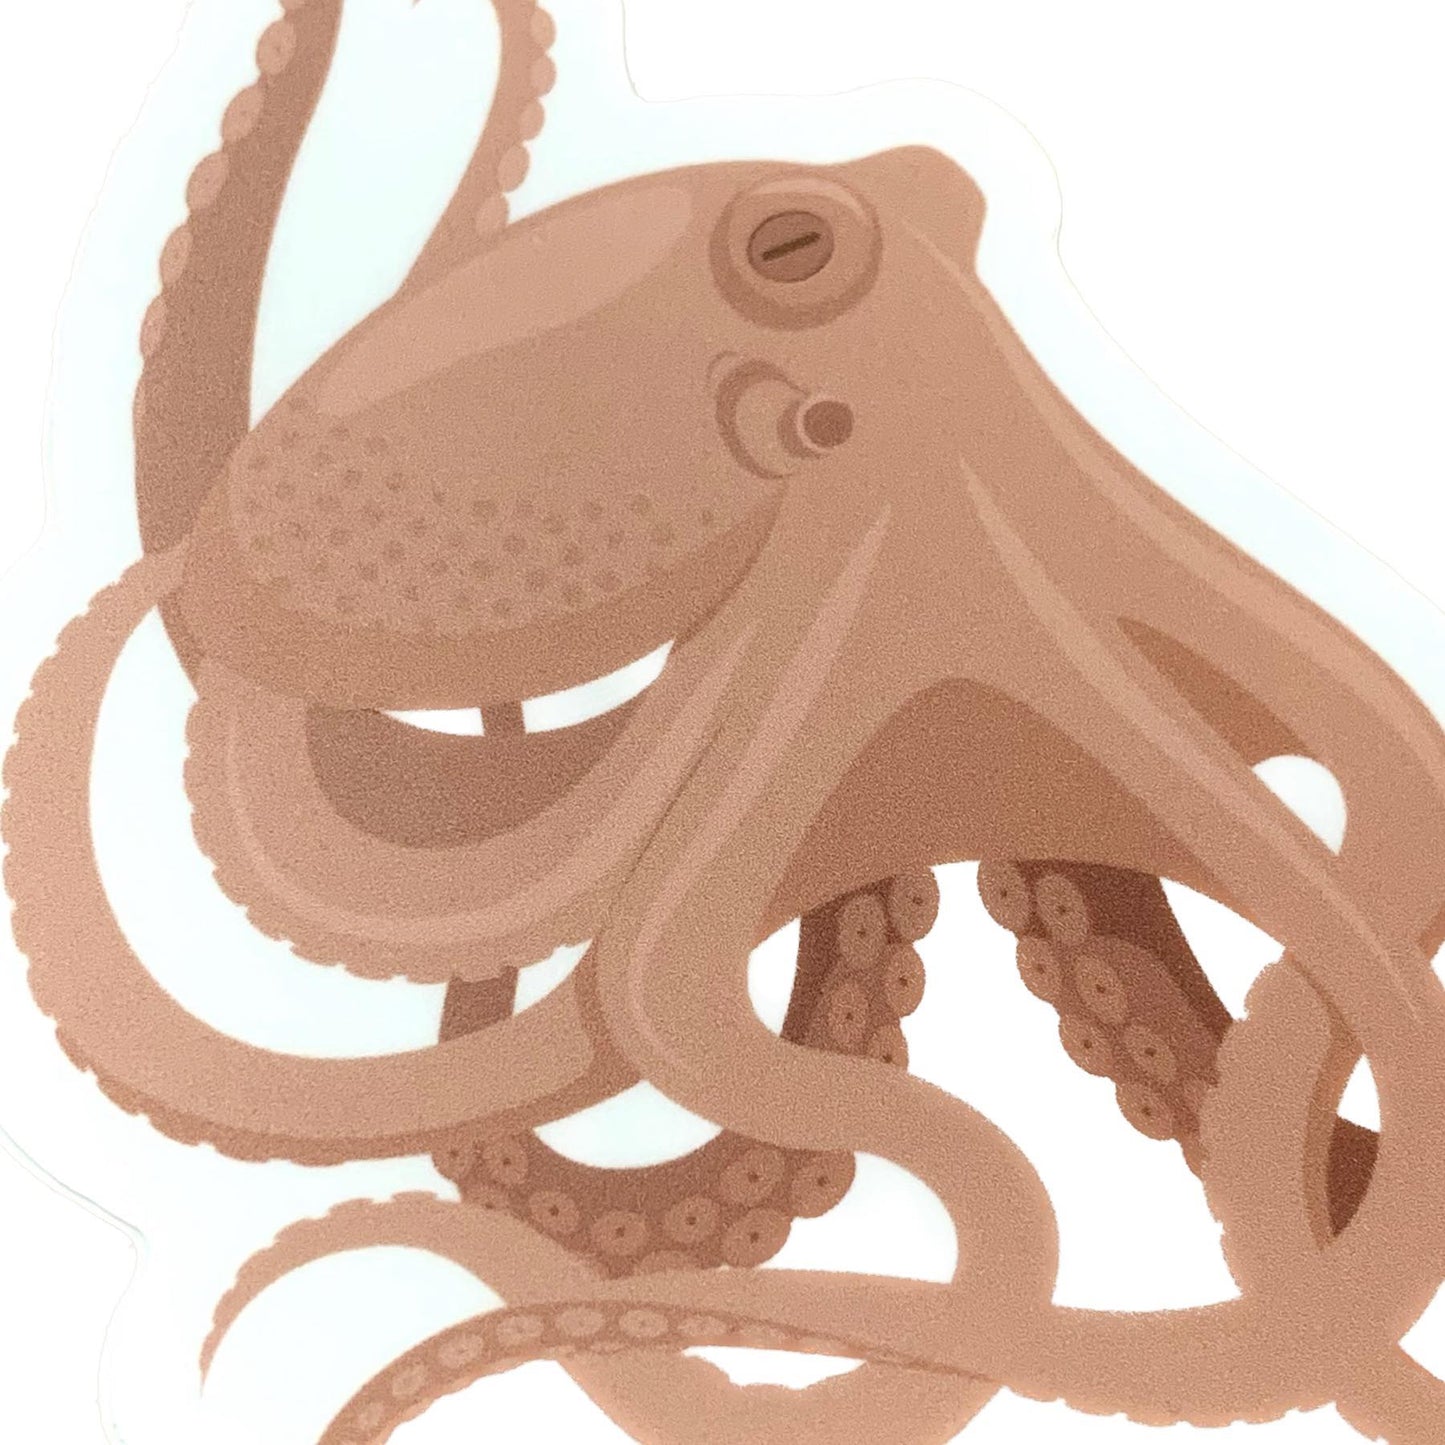 SAILFISH CREATIVE- "Octopus" Vinyl Sticker